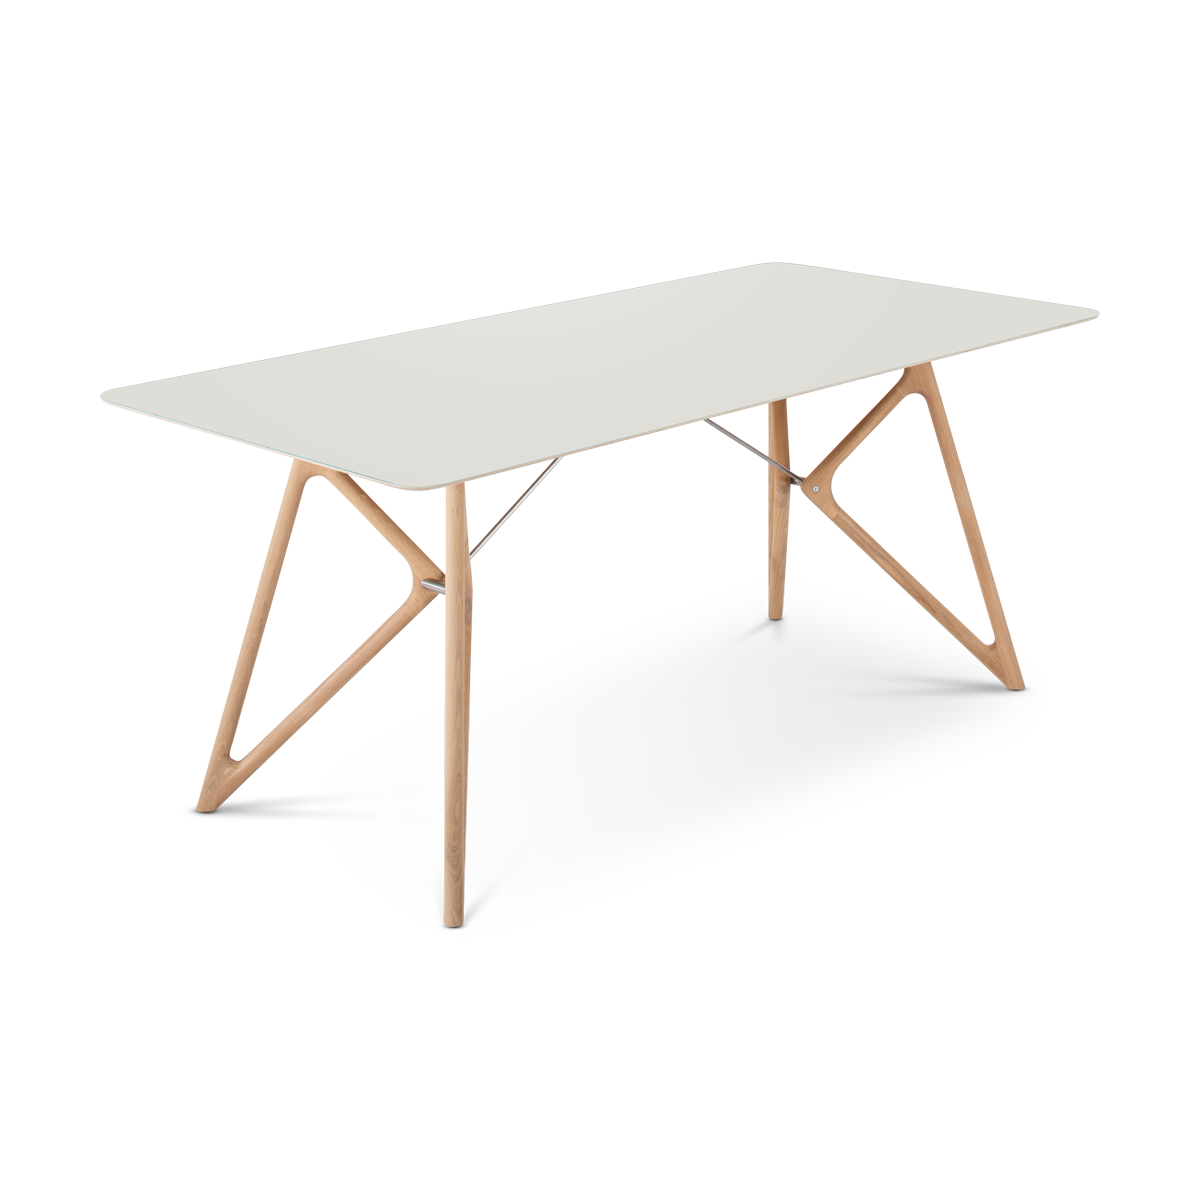 Tink table houten eettafel whitewash - met linoleum tafelblad mushroom - 180 x 90 cm